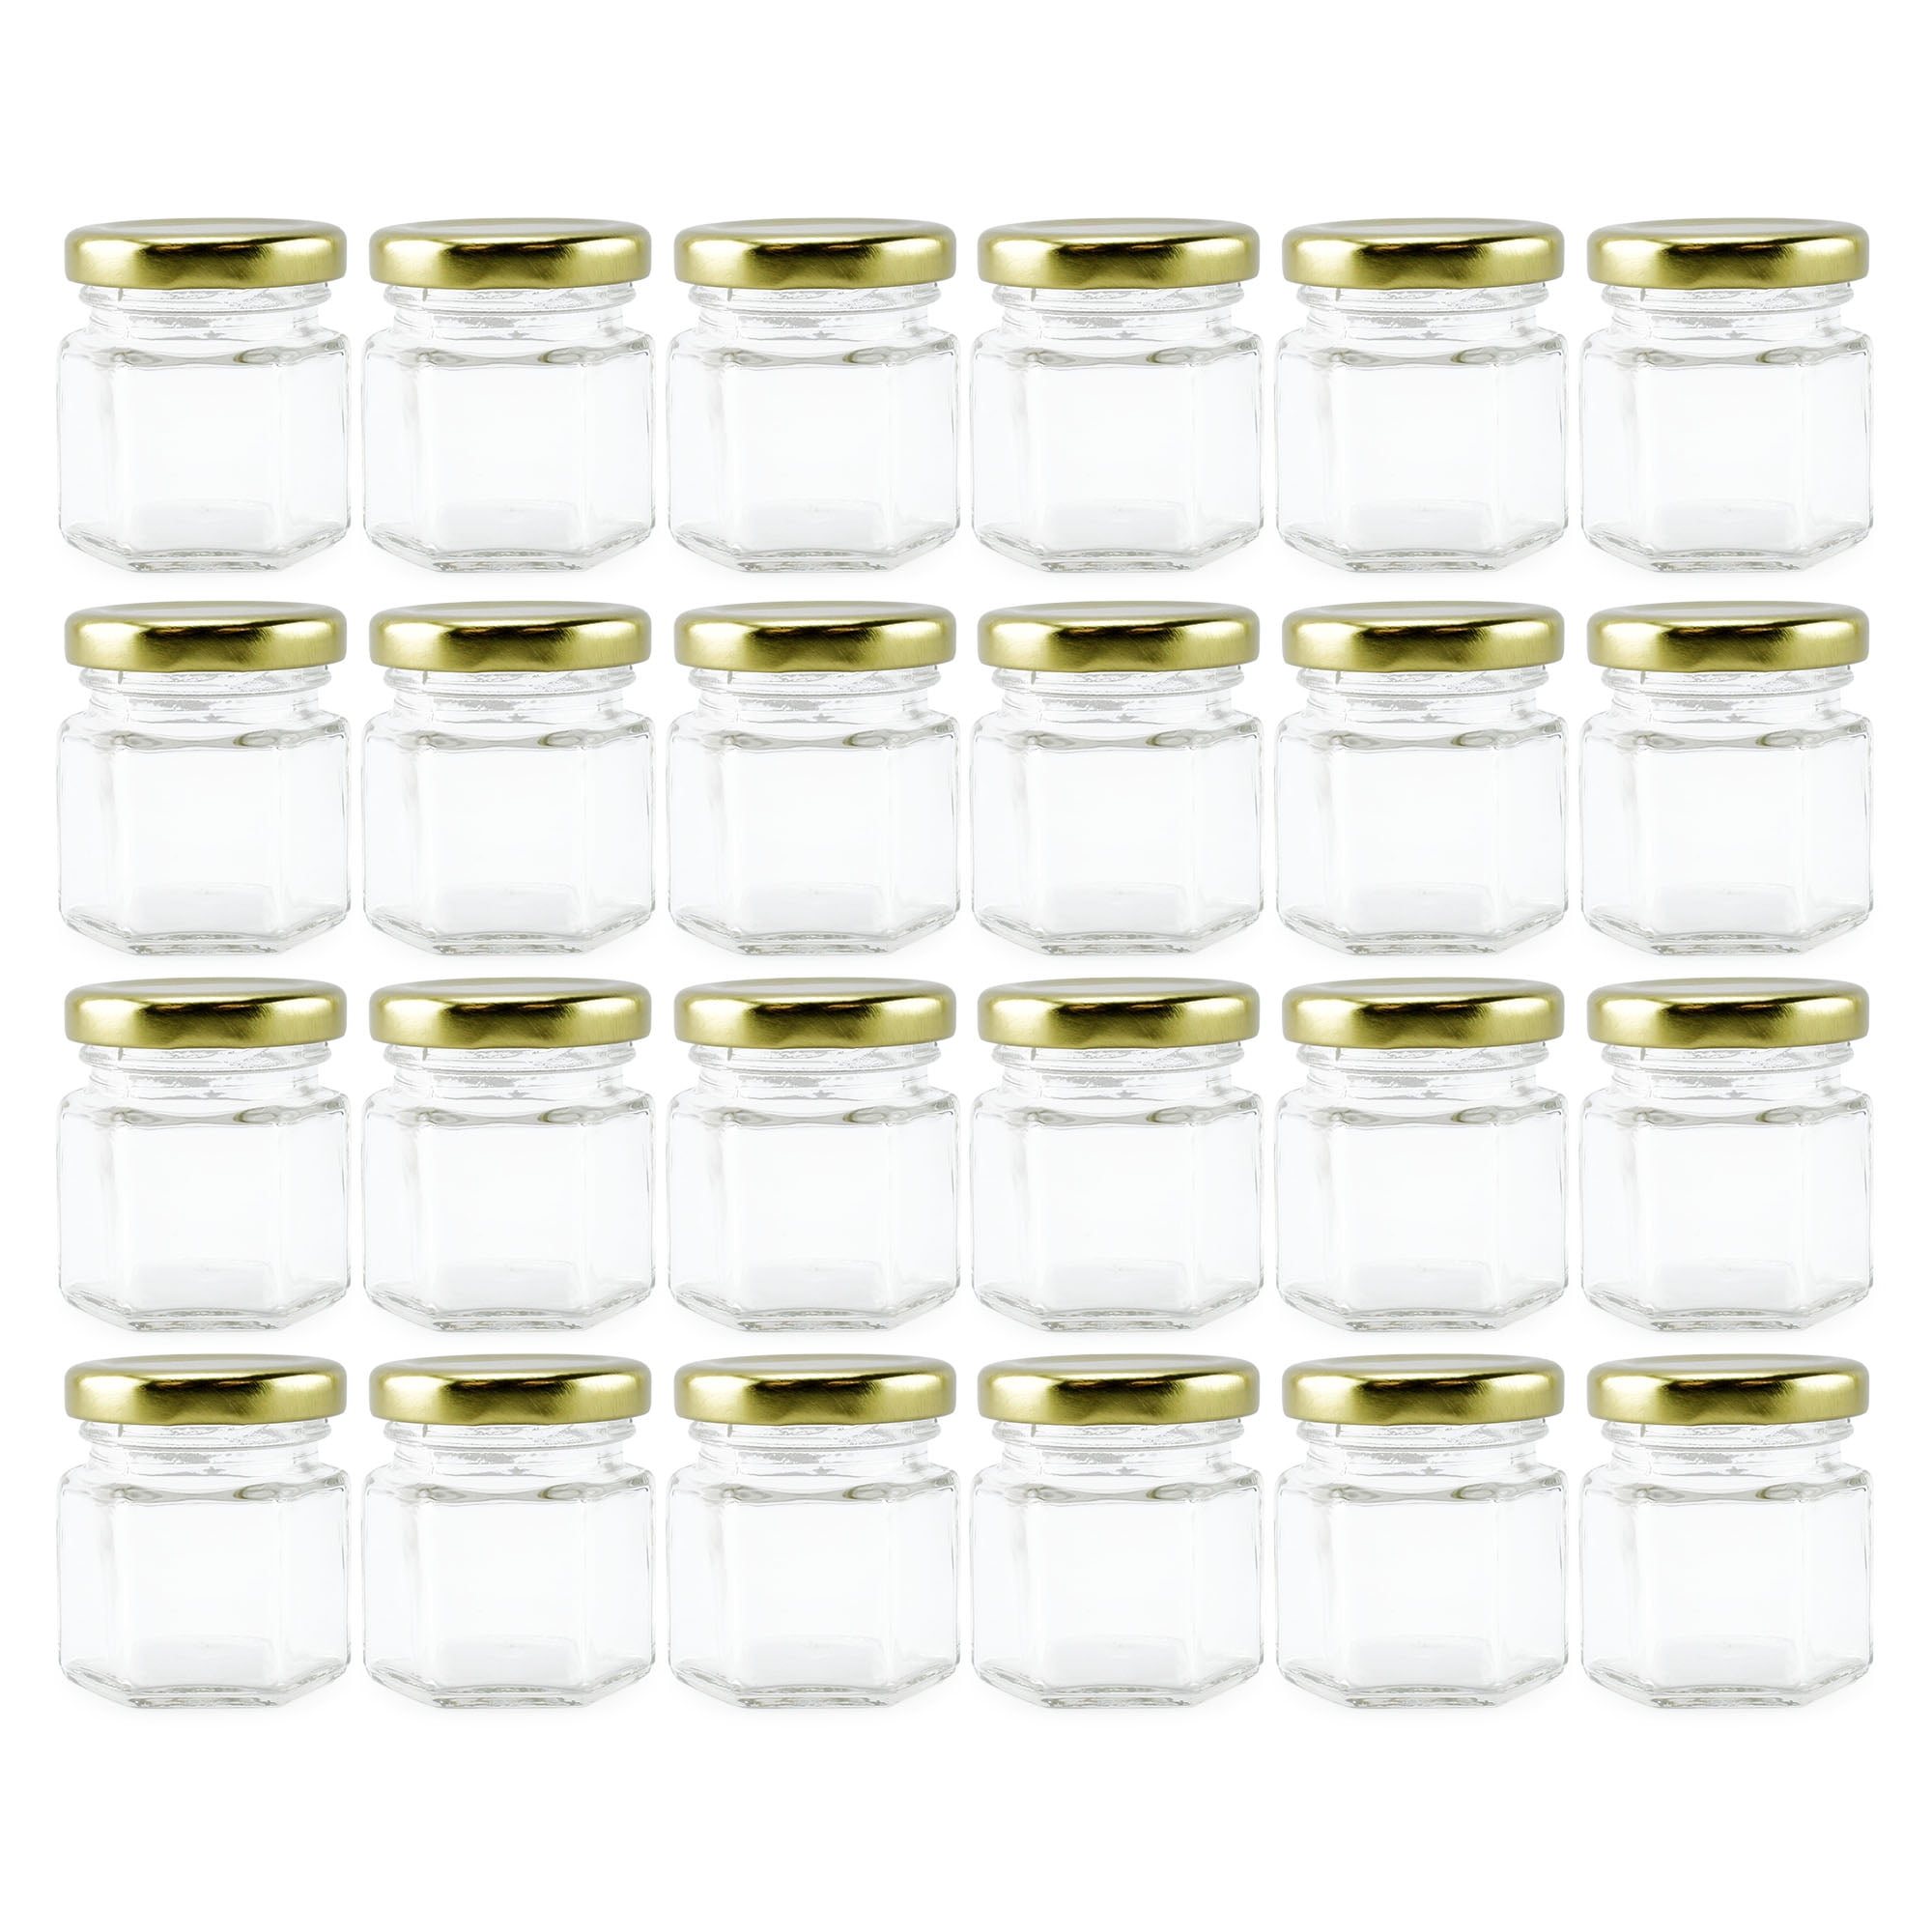 Gojars Hexagon Glass Jars 6oz Premium Food-grade. Mini Jars With